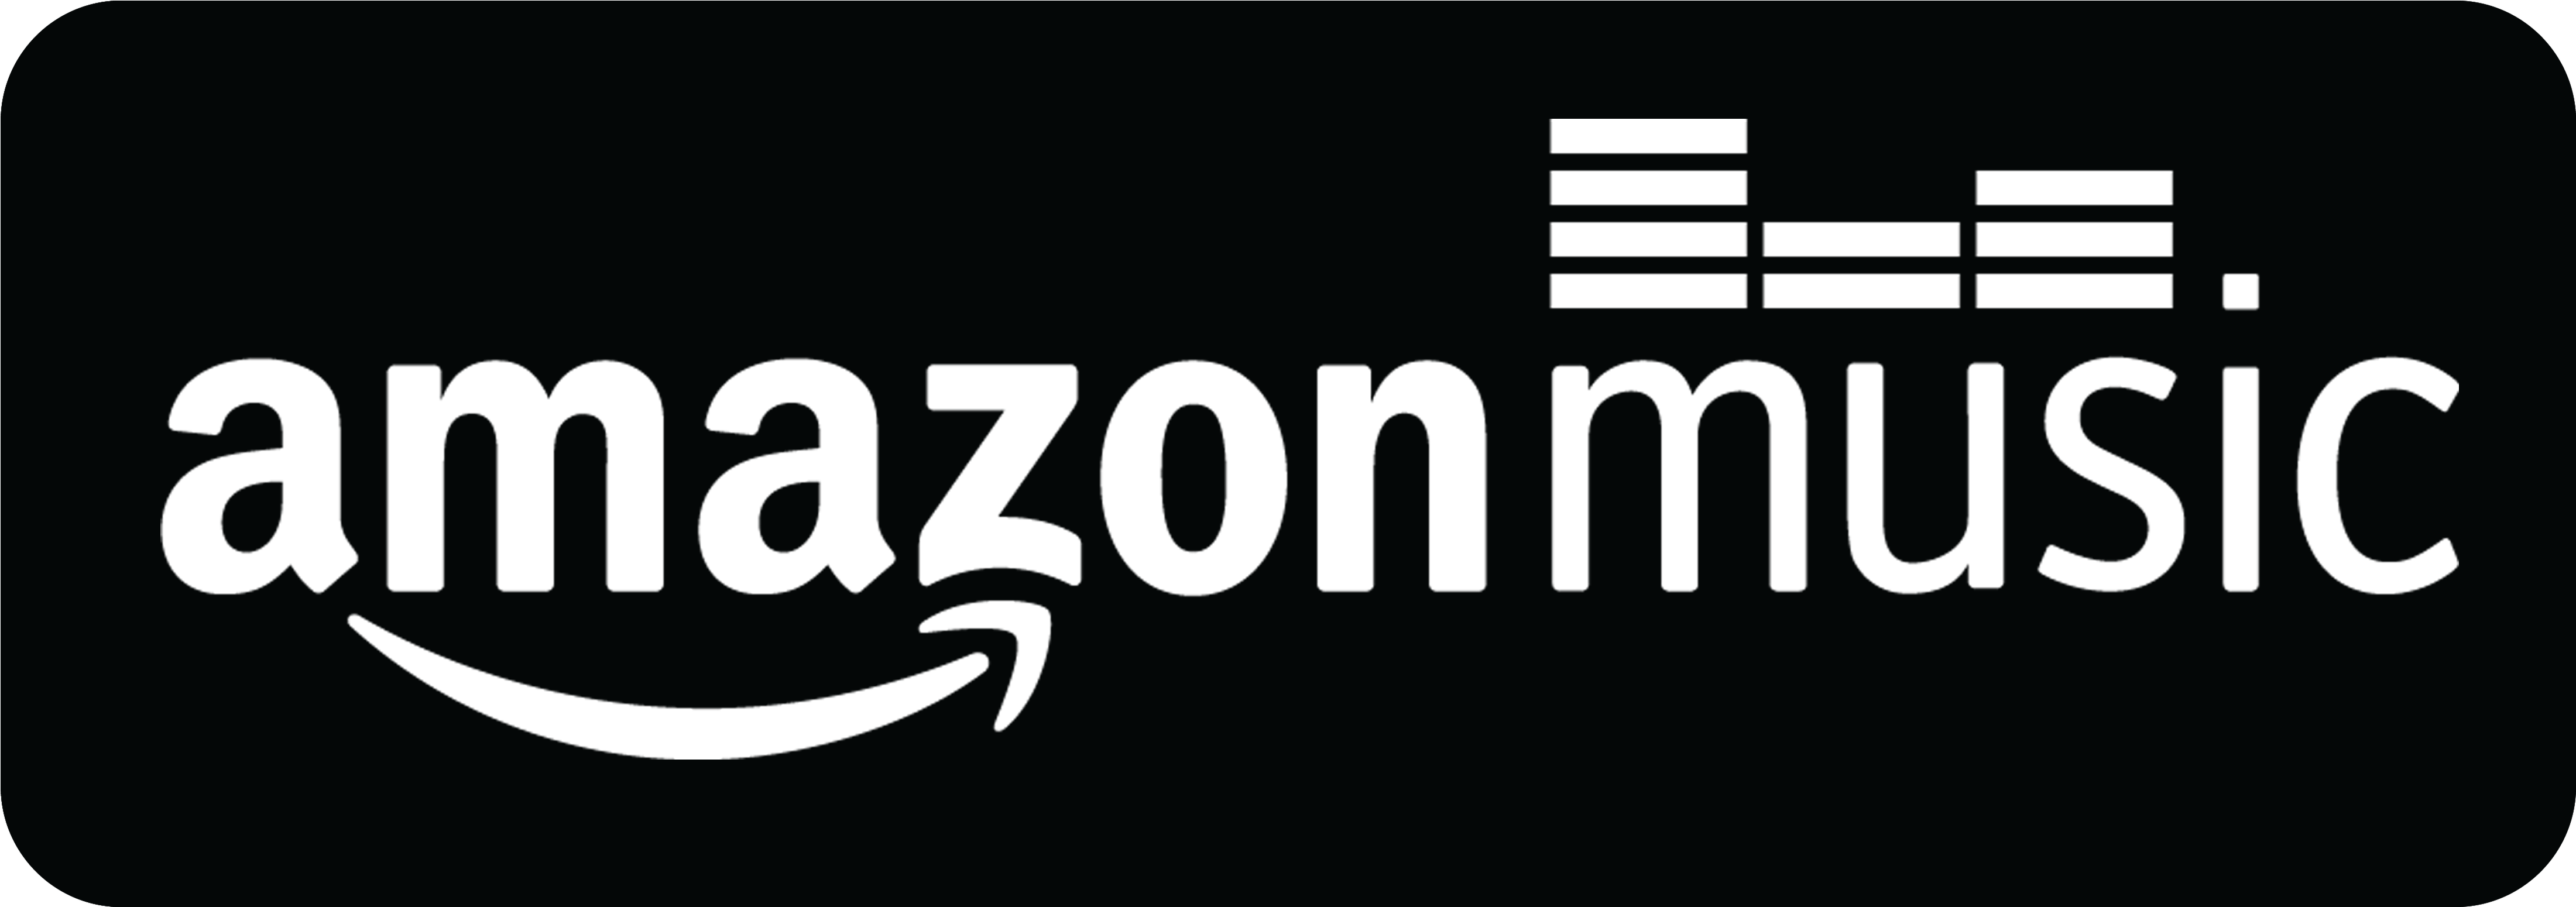 Amazon Music Logo - Download Link Amazon Music - Amazon Music Logo Png Transparent ...